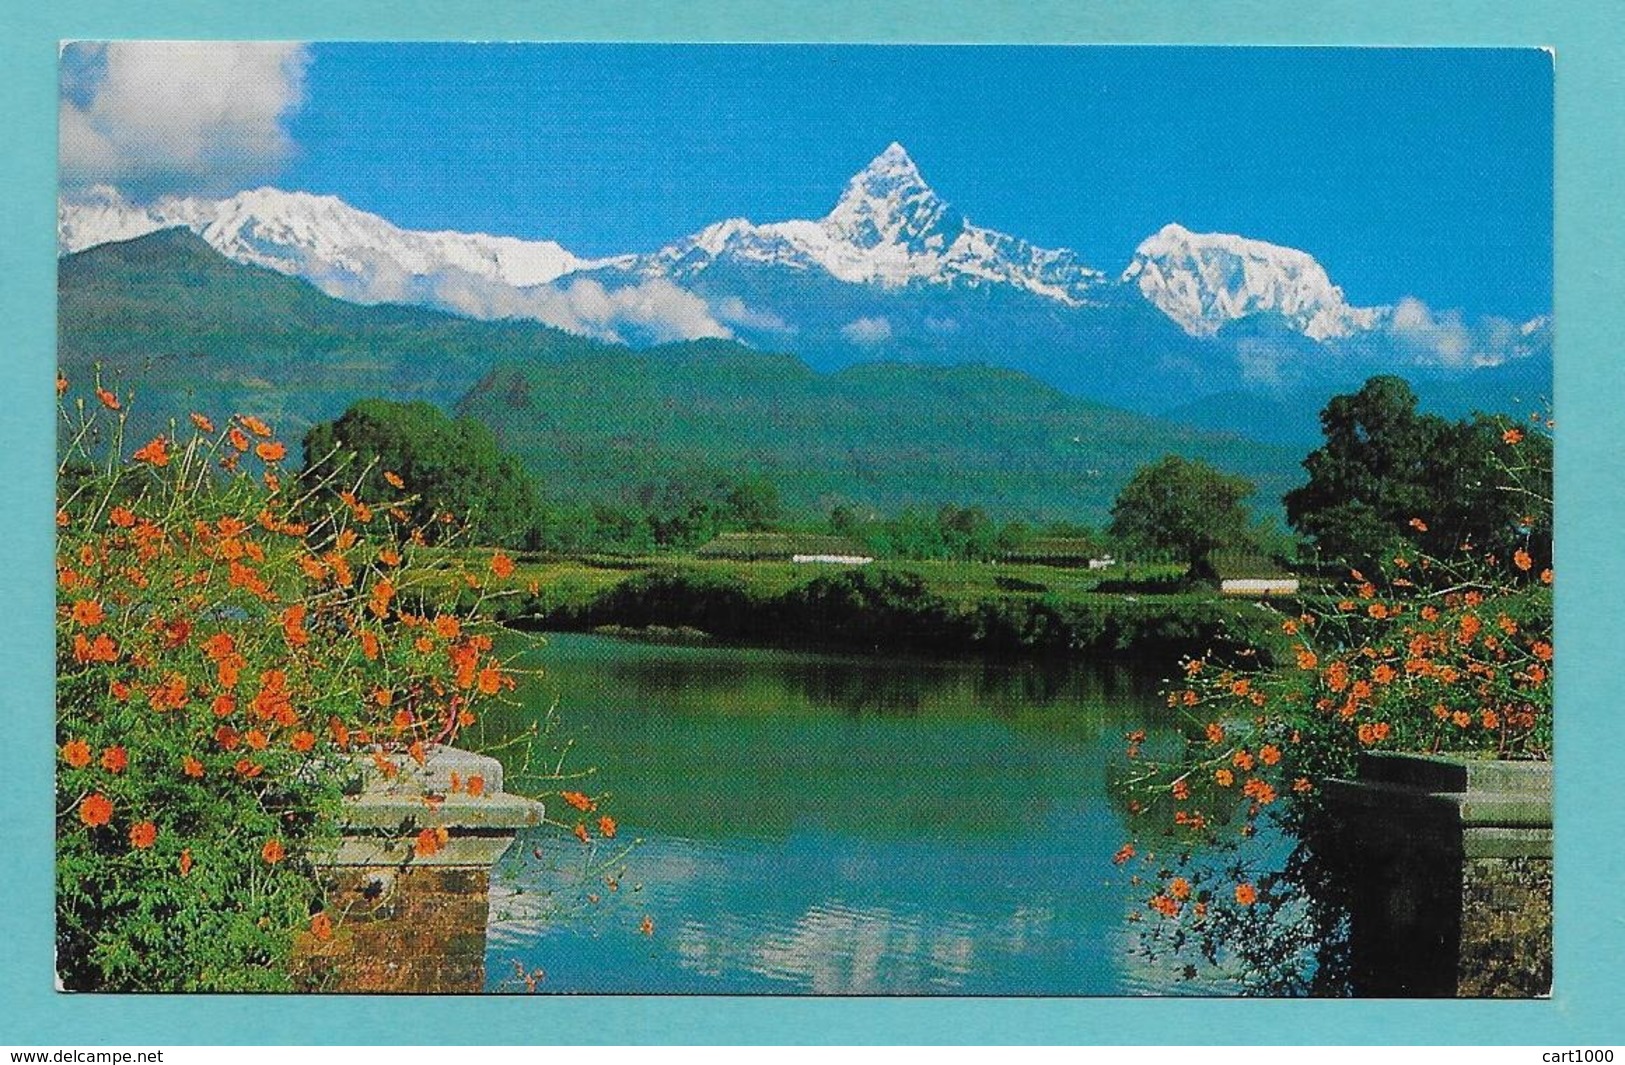 NEPAL PHEWS TAL AND MACHHAPUCHHARE 1972 - Nepal